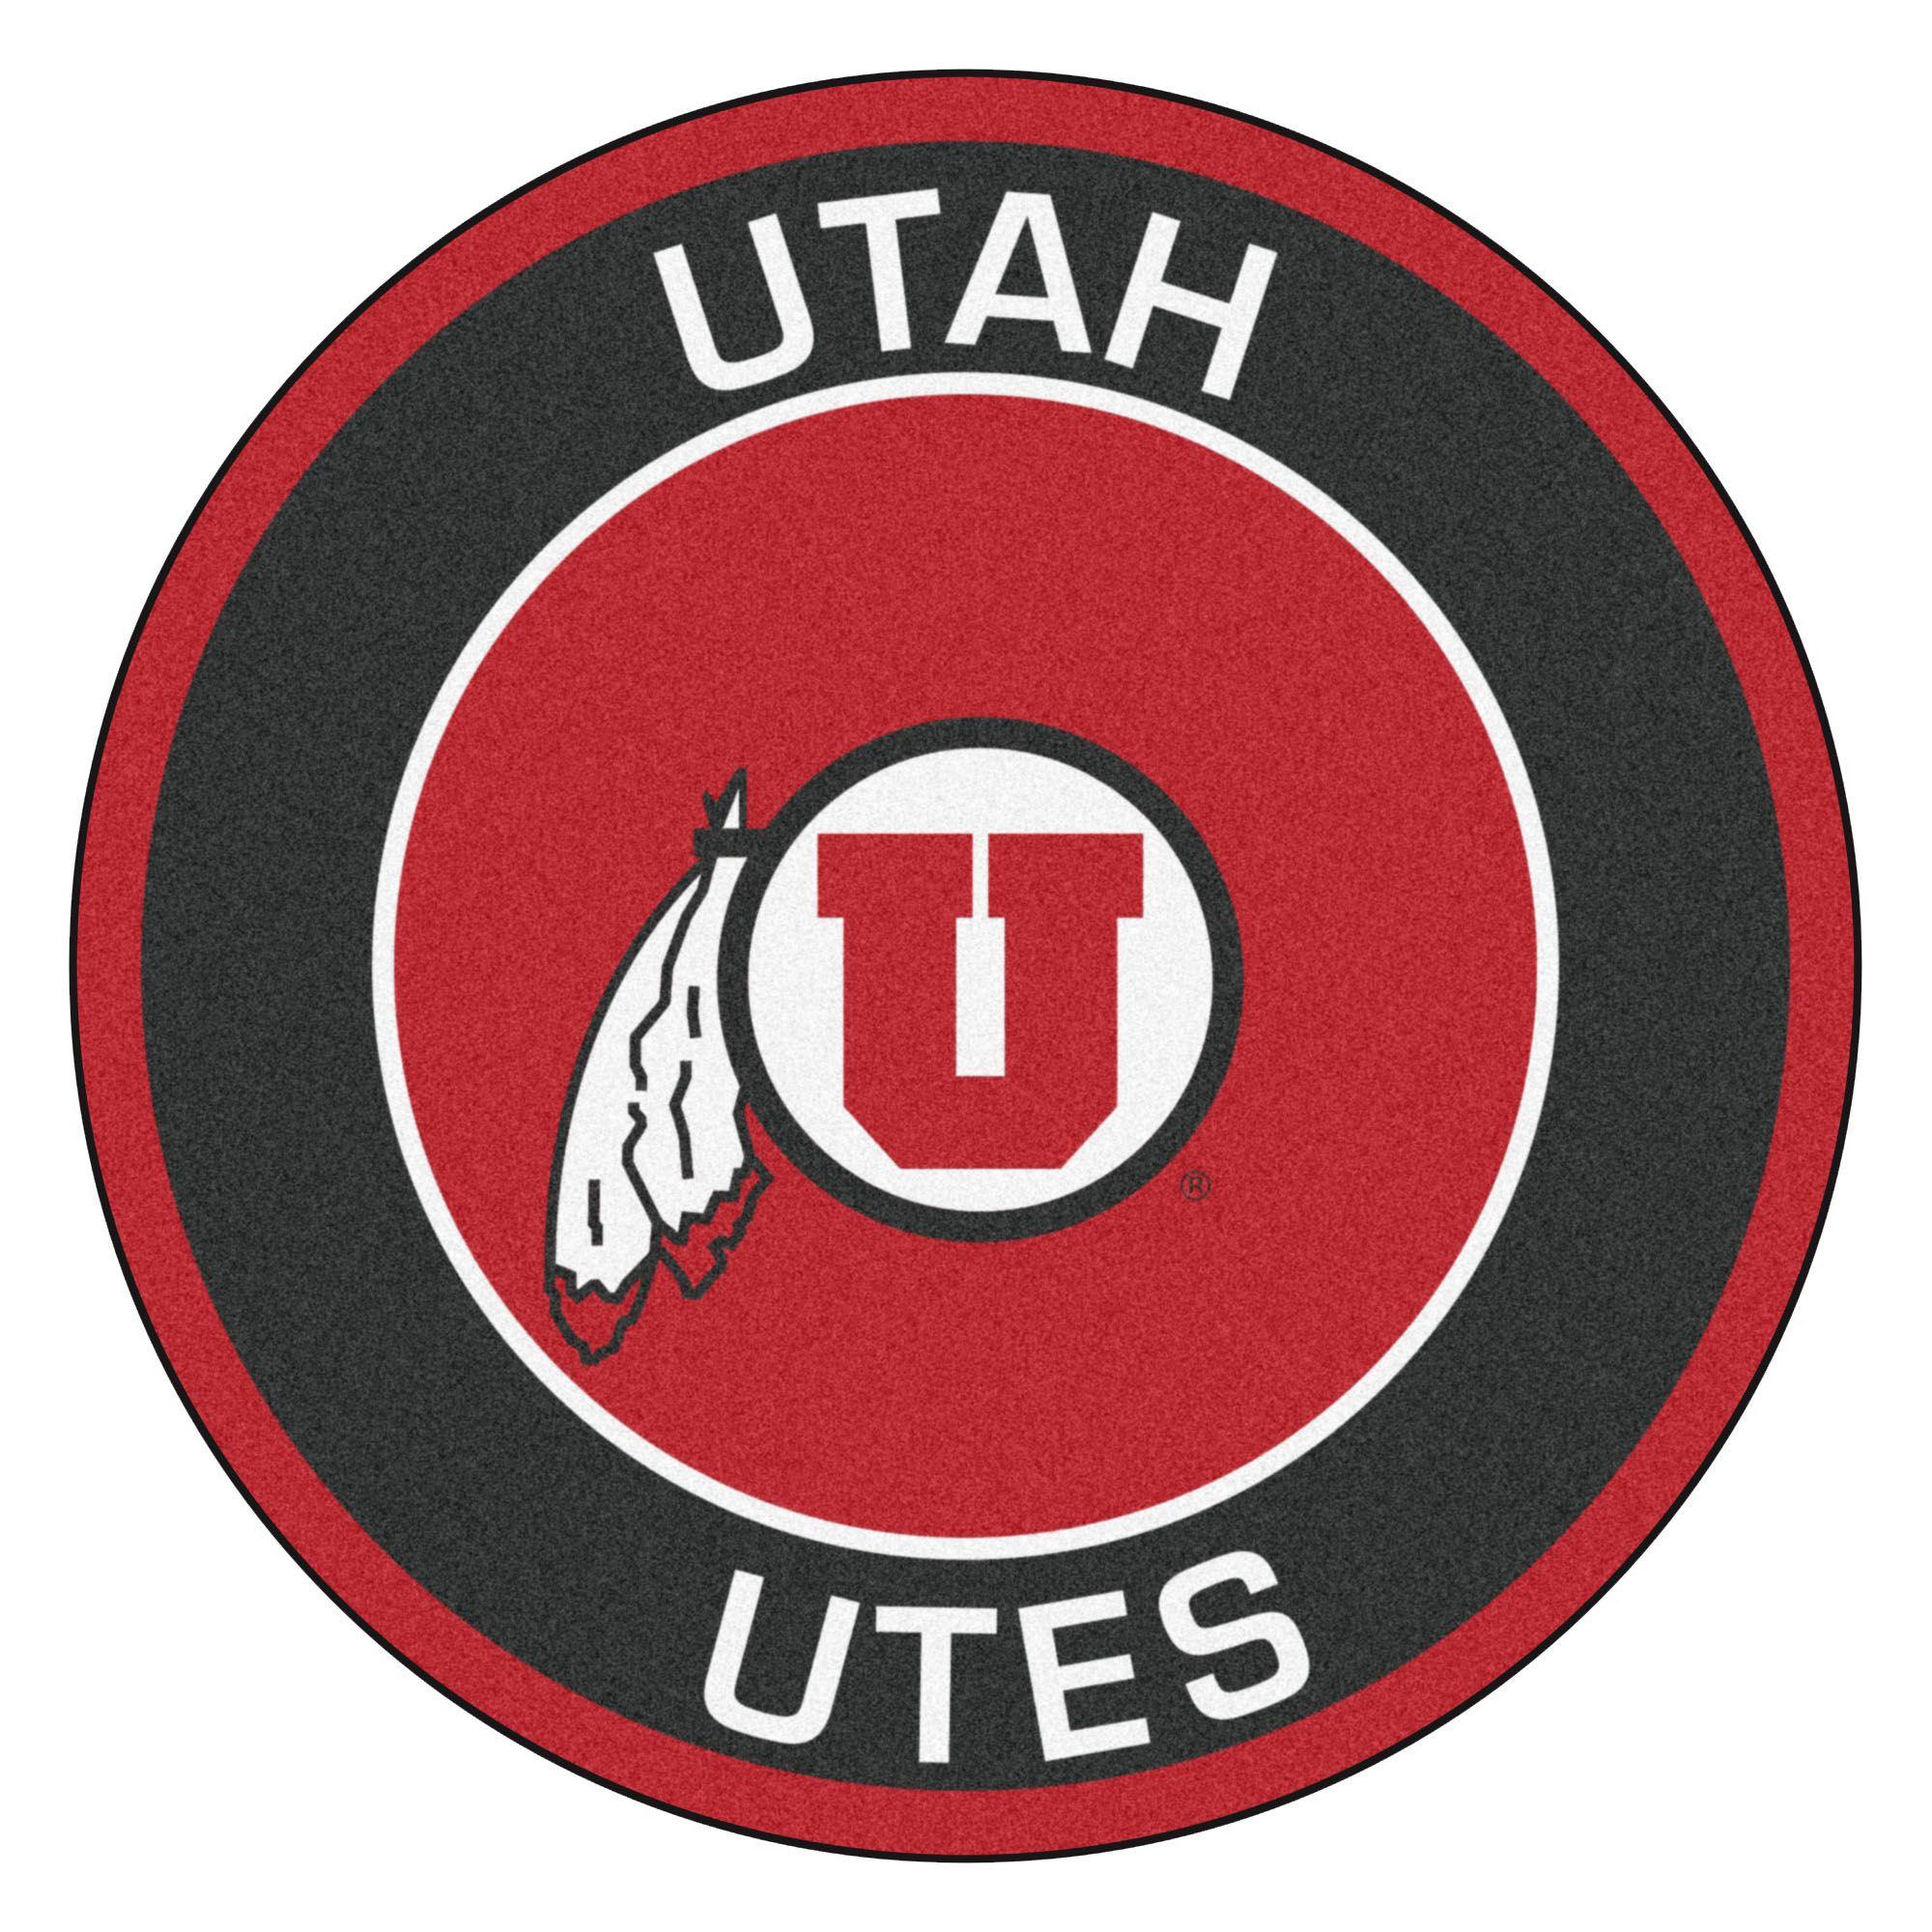 University of Utah Printable Logo - Utah utes Logos